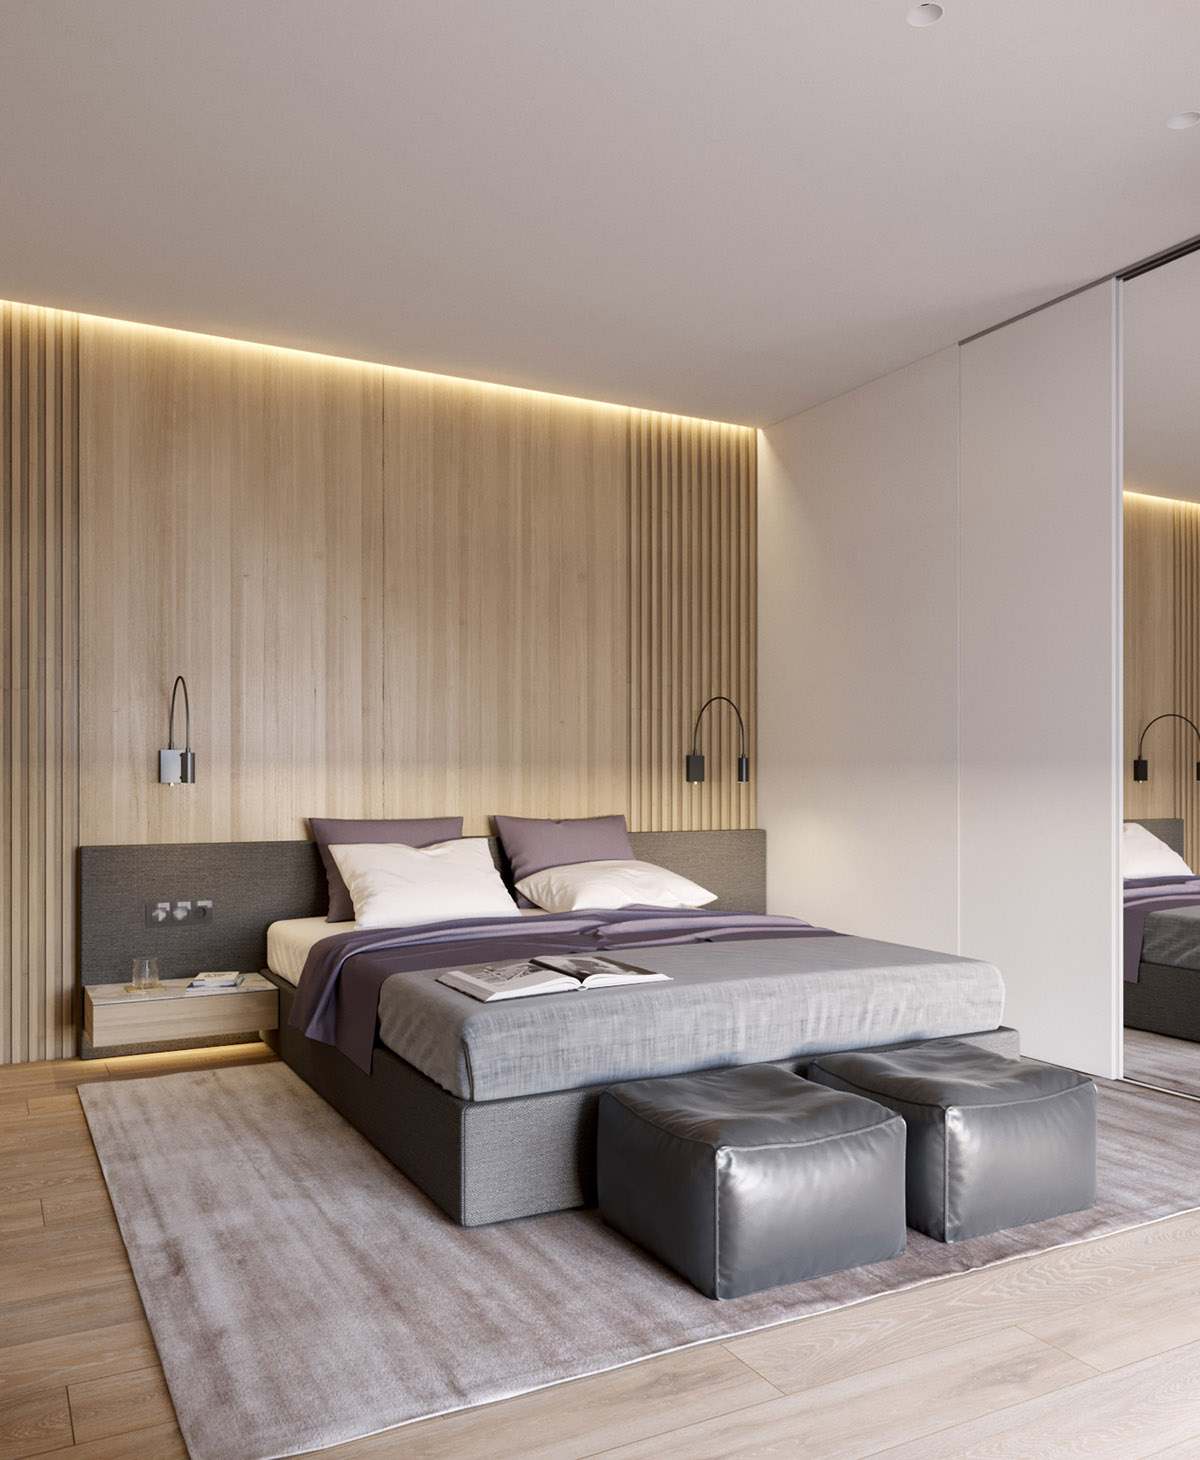 grey-and-purple-bedroom-design-inspiration